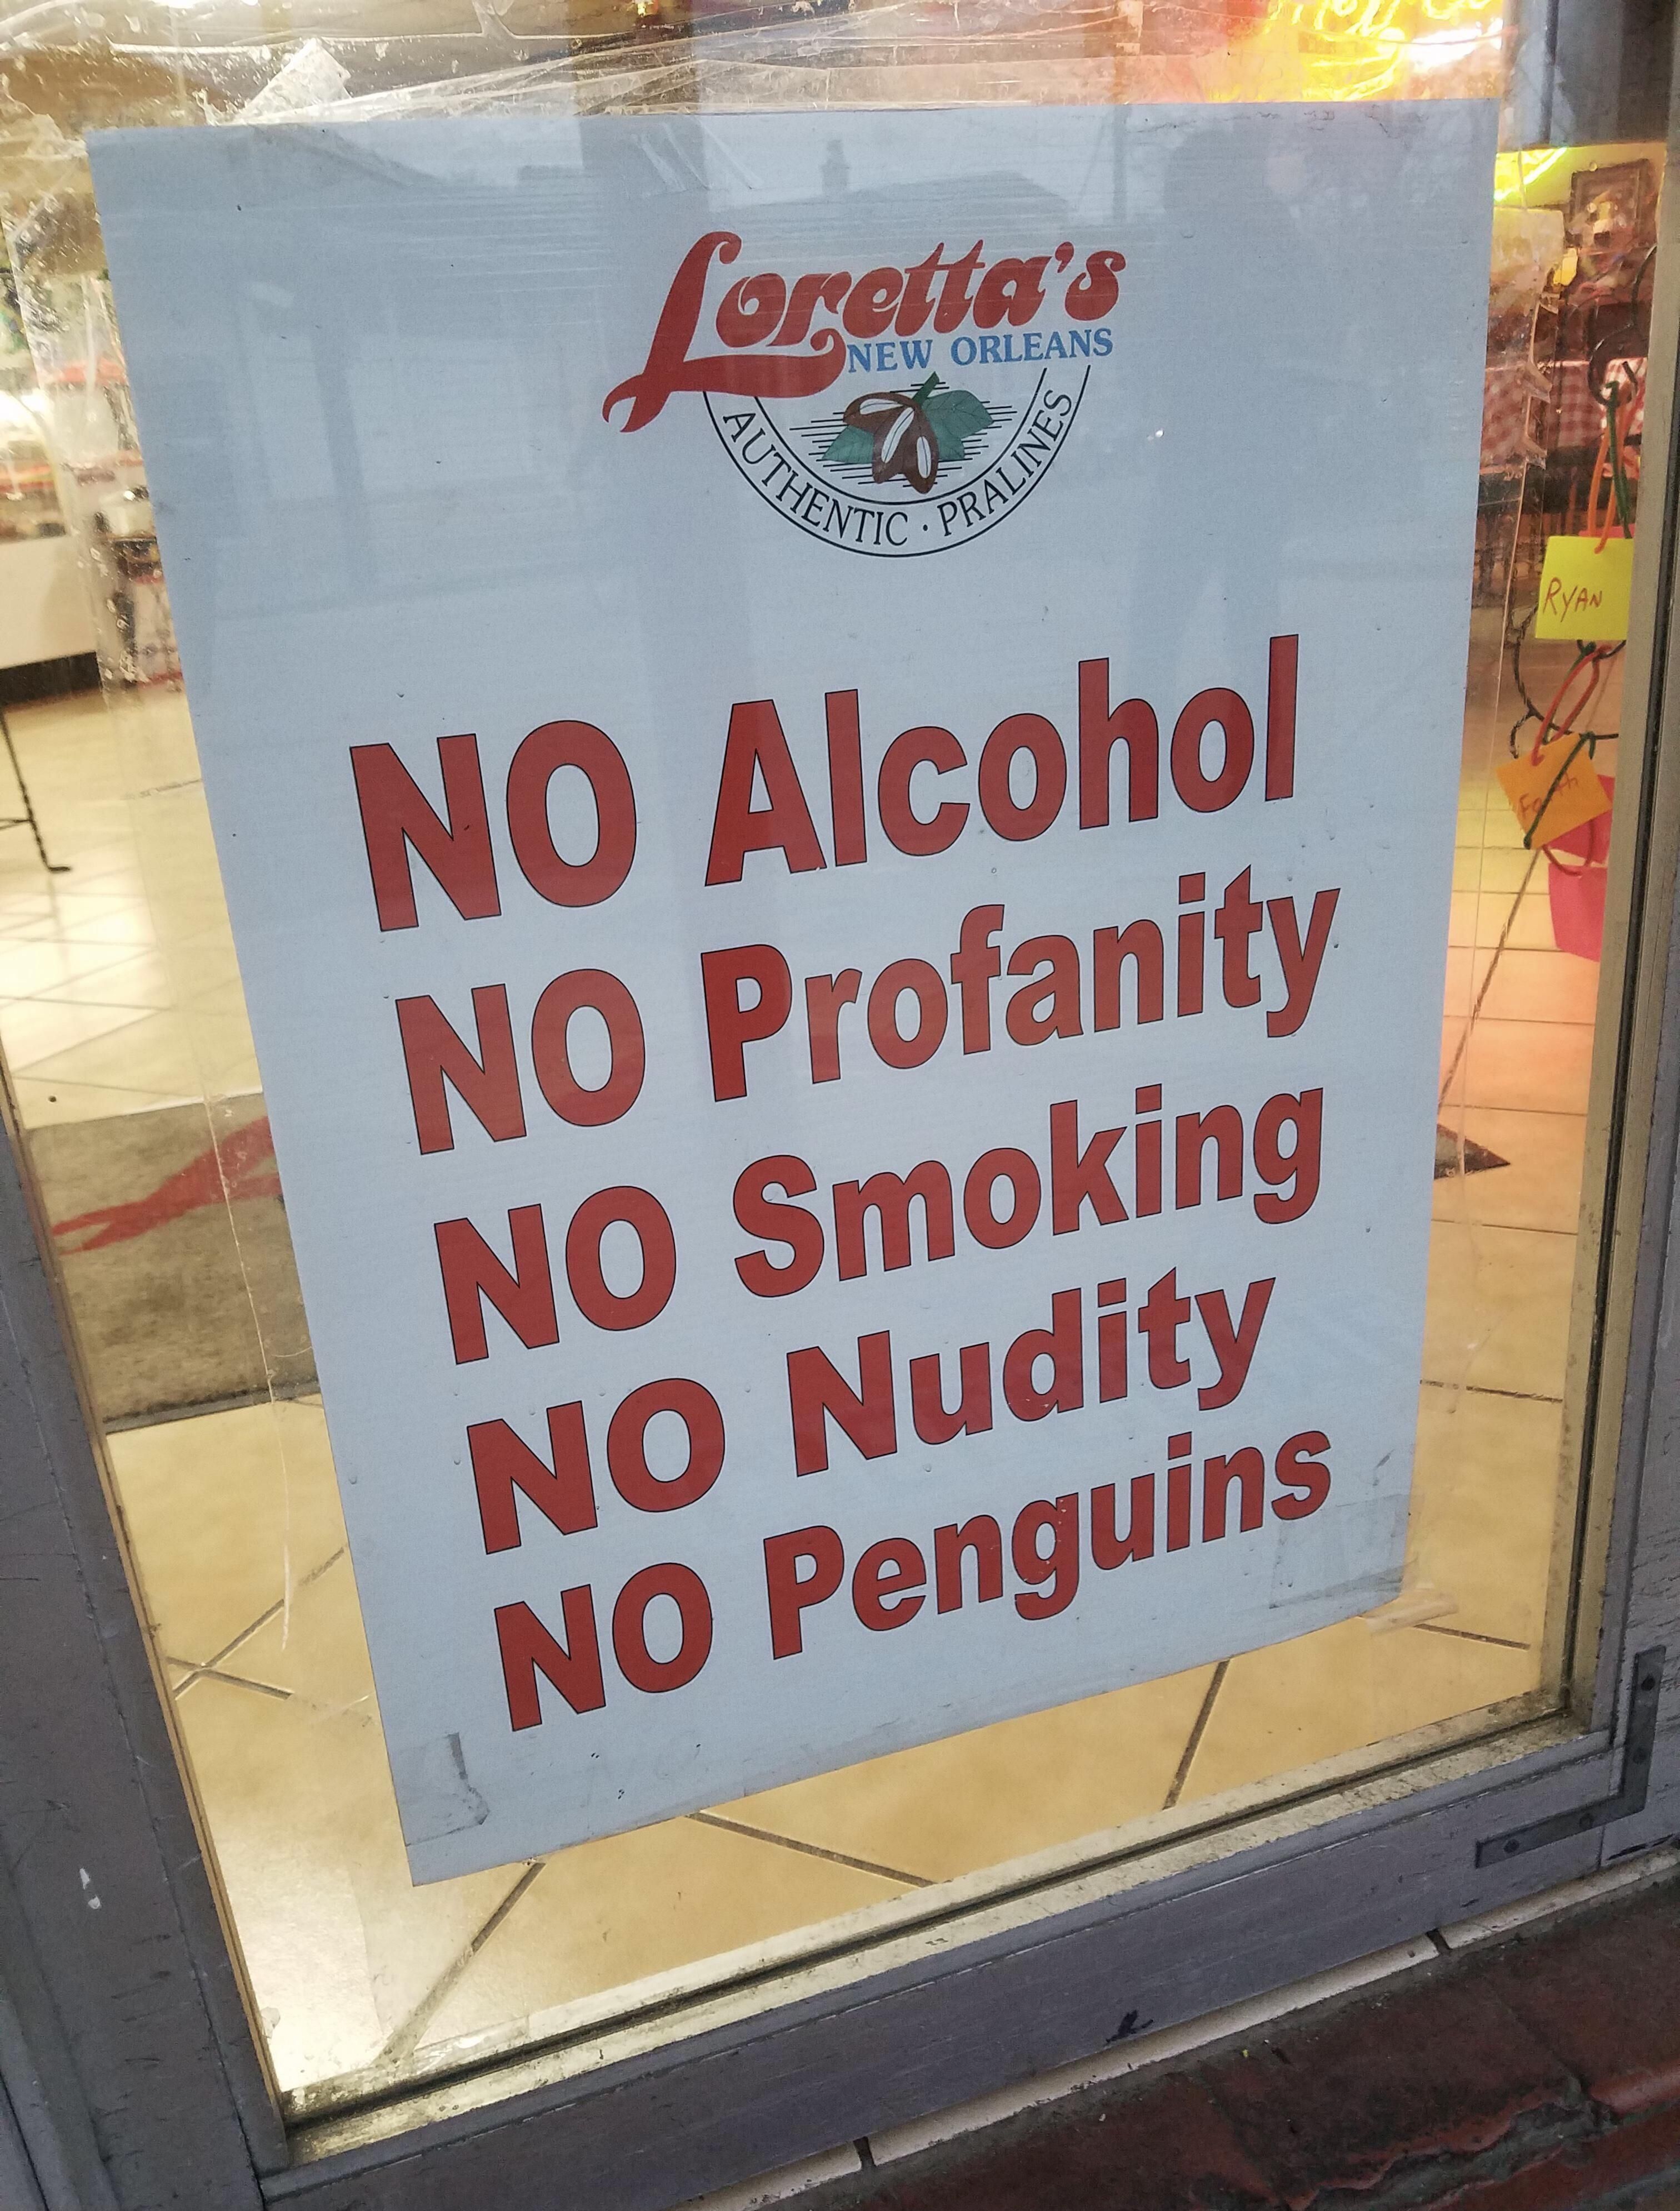 Someone better call the Penguin Civil Liberties Union